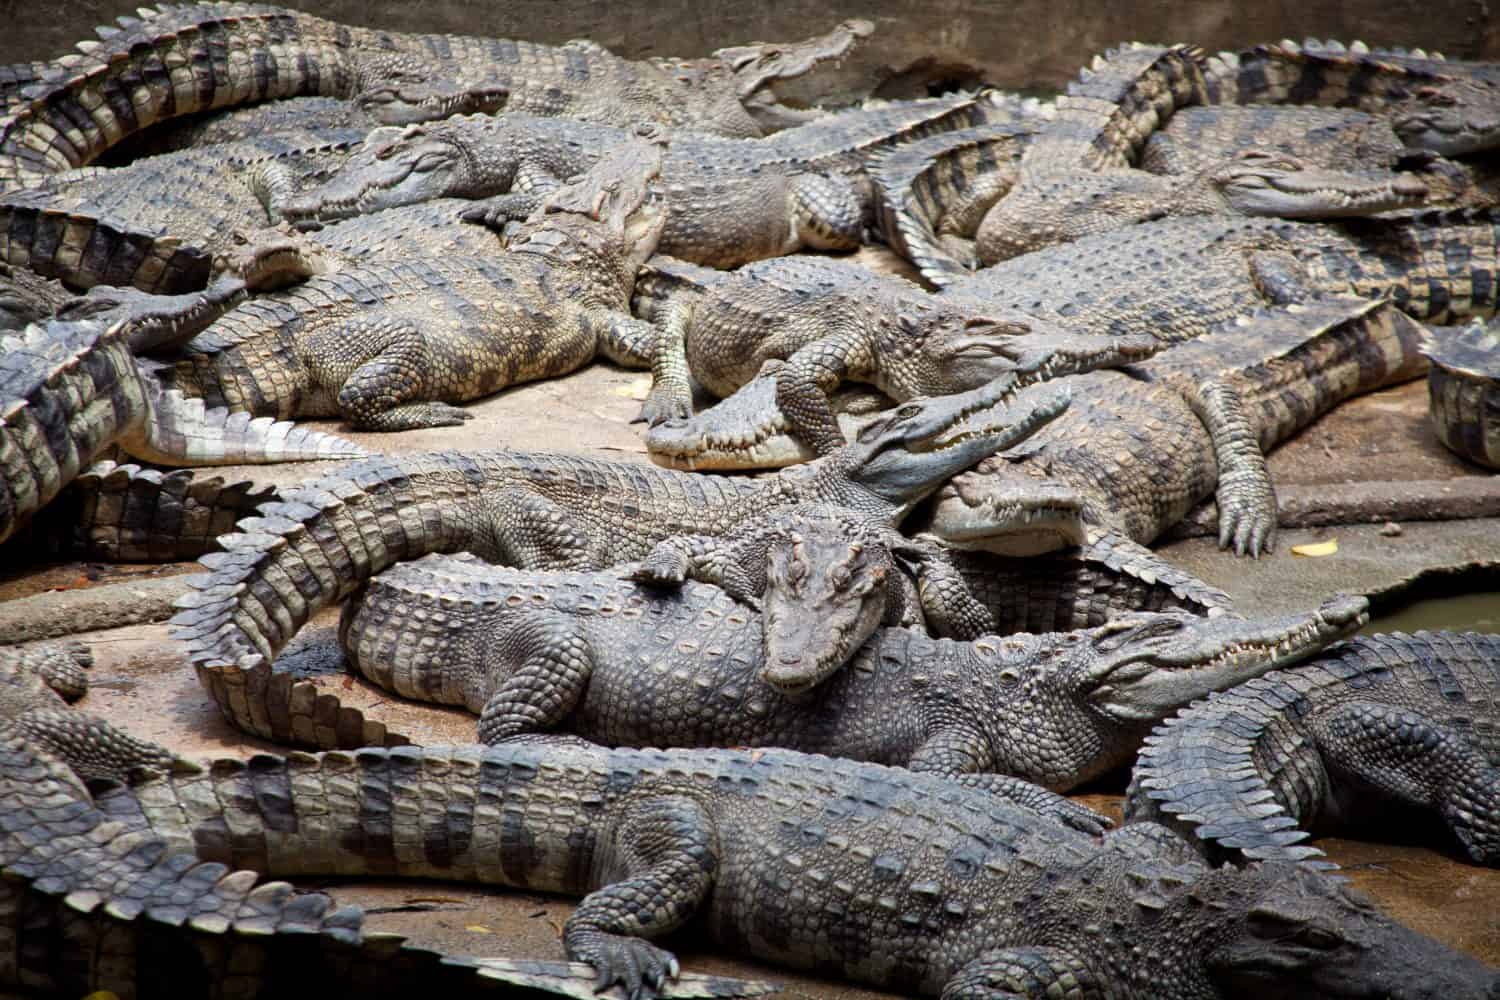 Crocodile, Lots of Crocodiles in Thailand